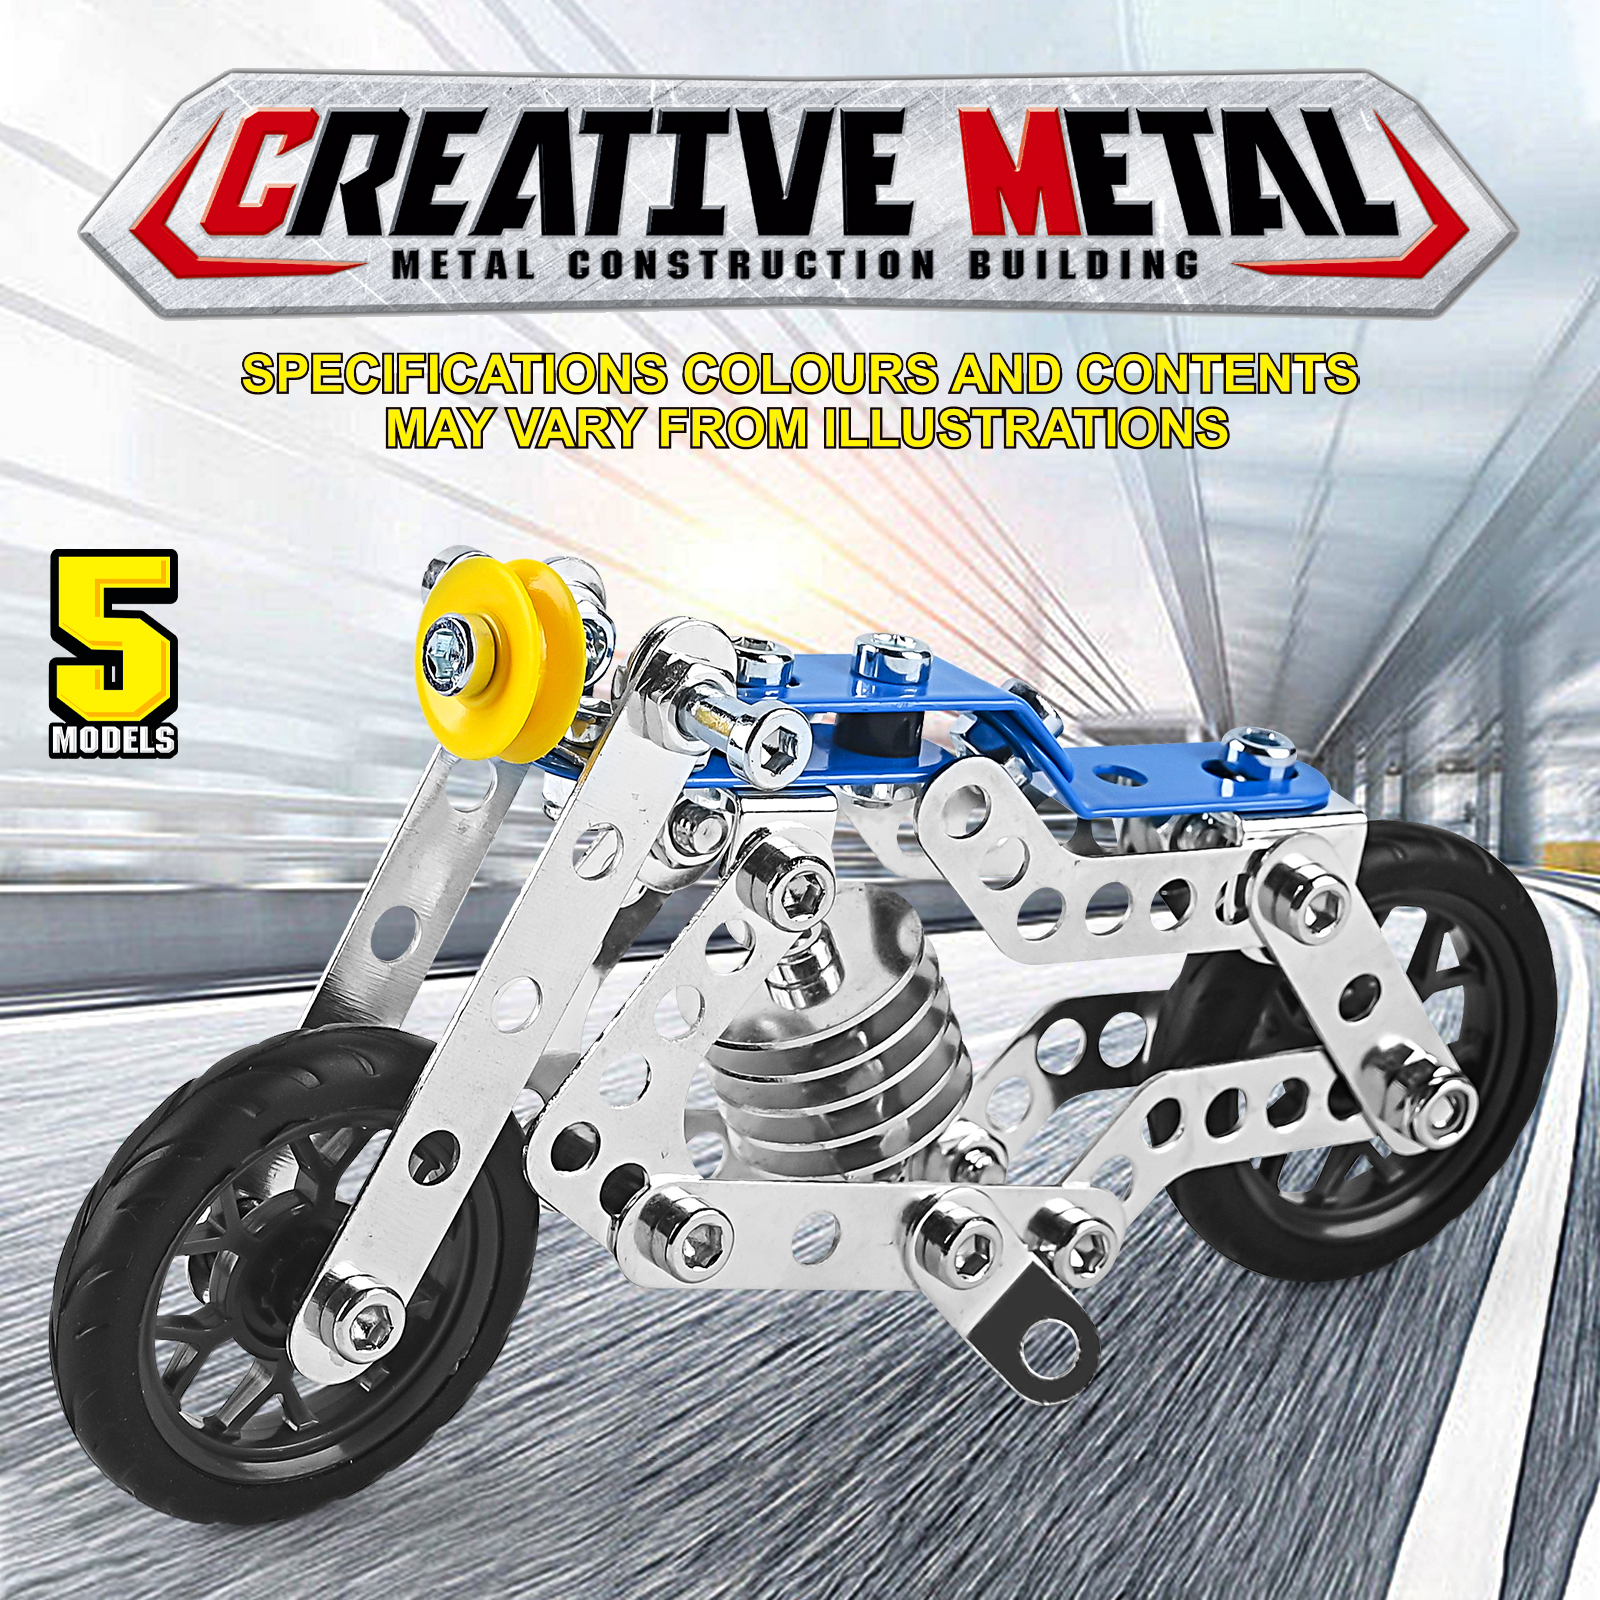 Meccano by Erector, Starter Set, Motorcycle Model Kit 